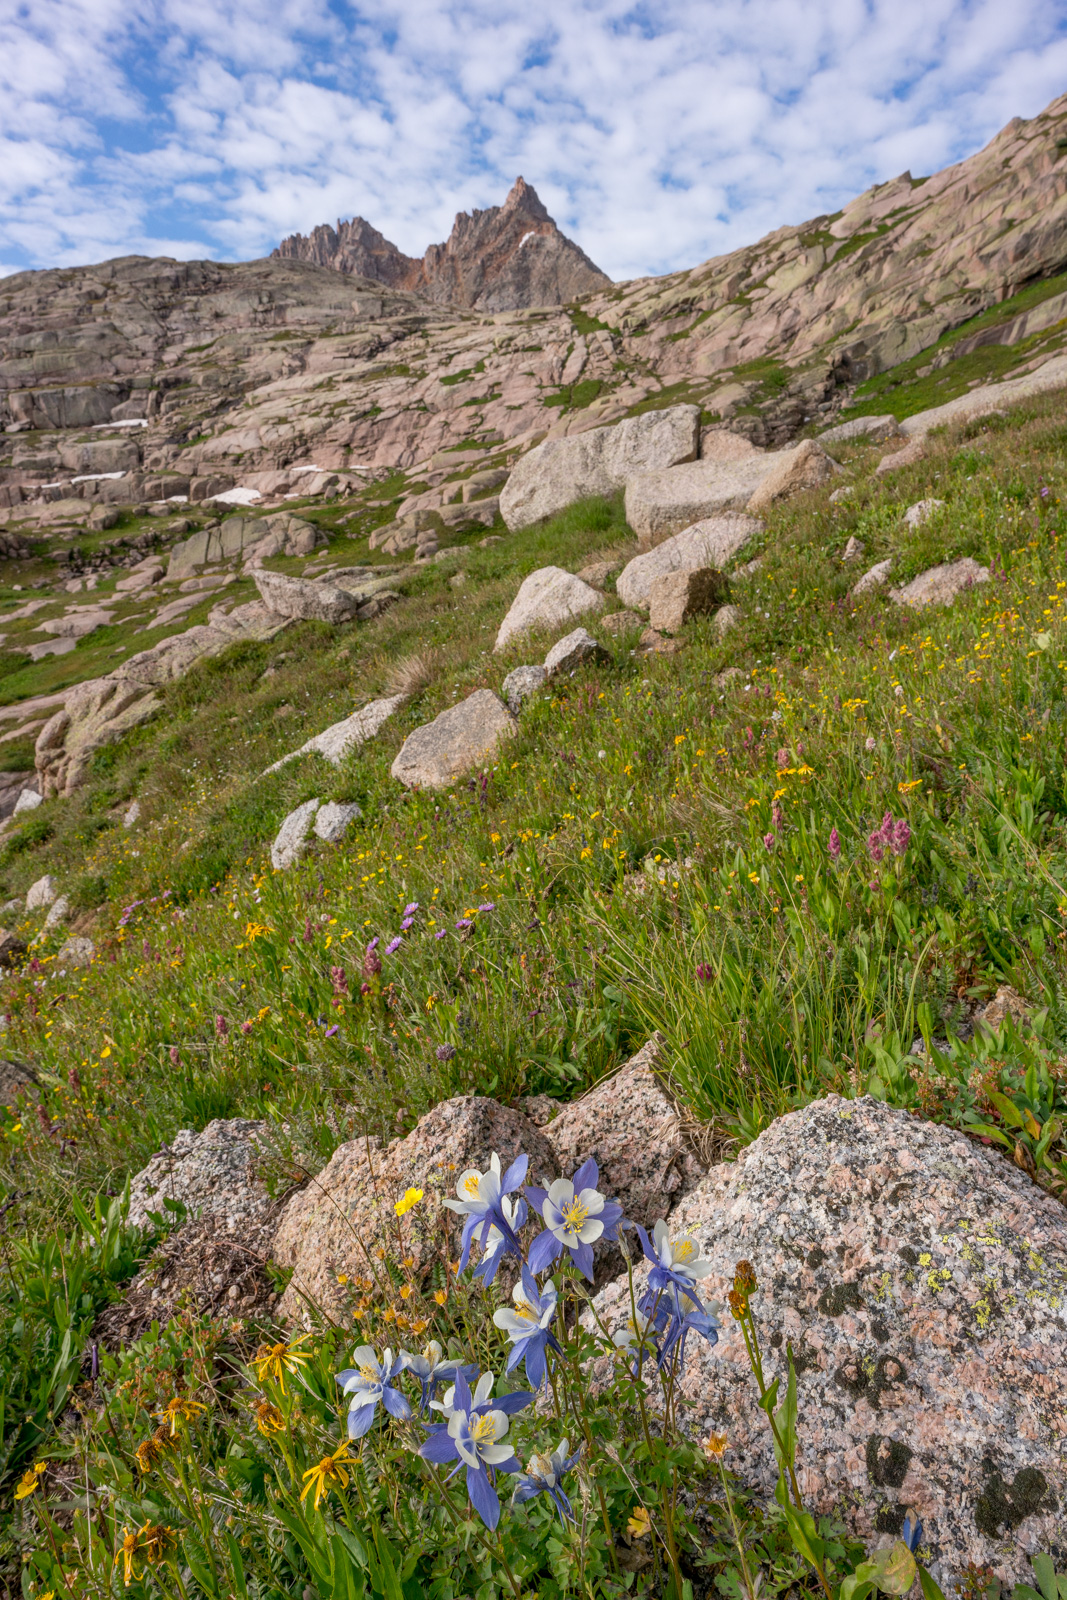 Sunlight Peak and Columbine flowers